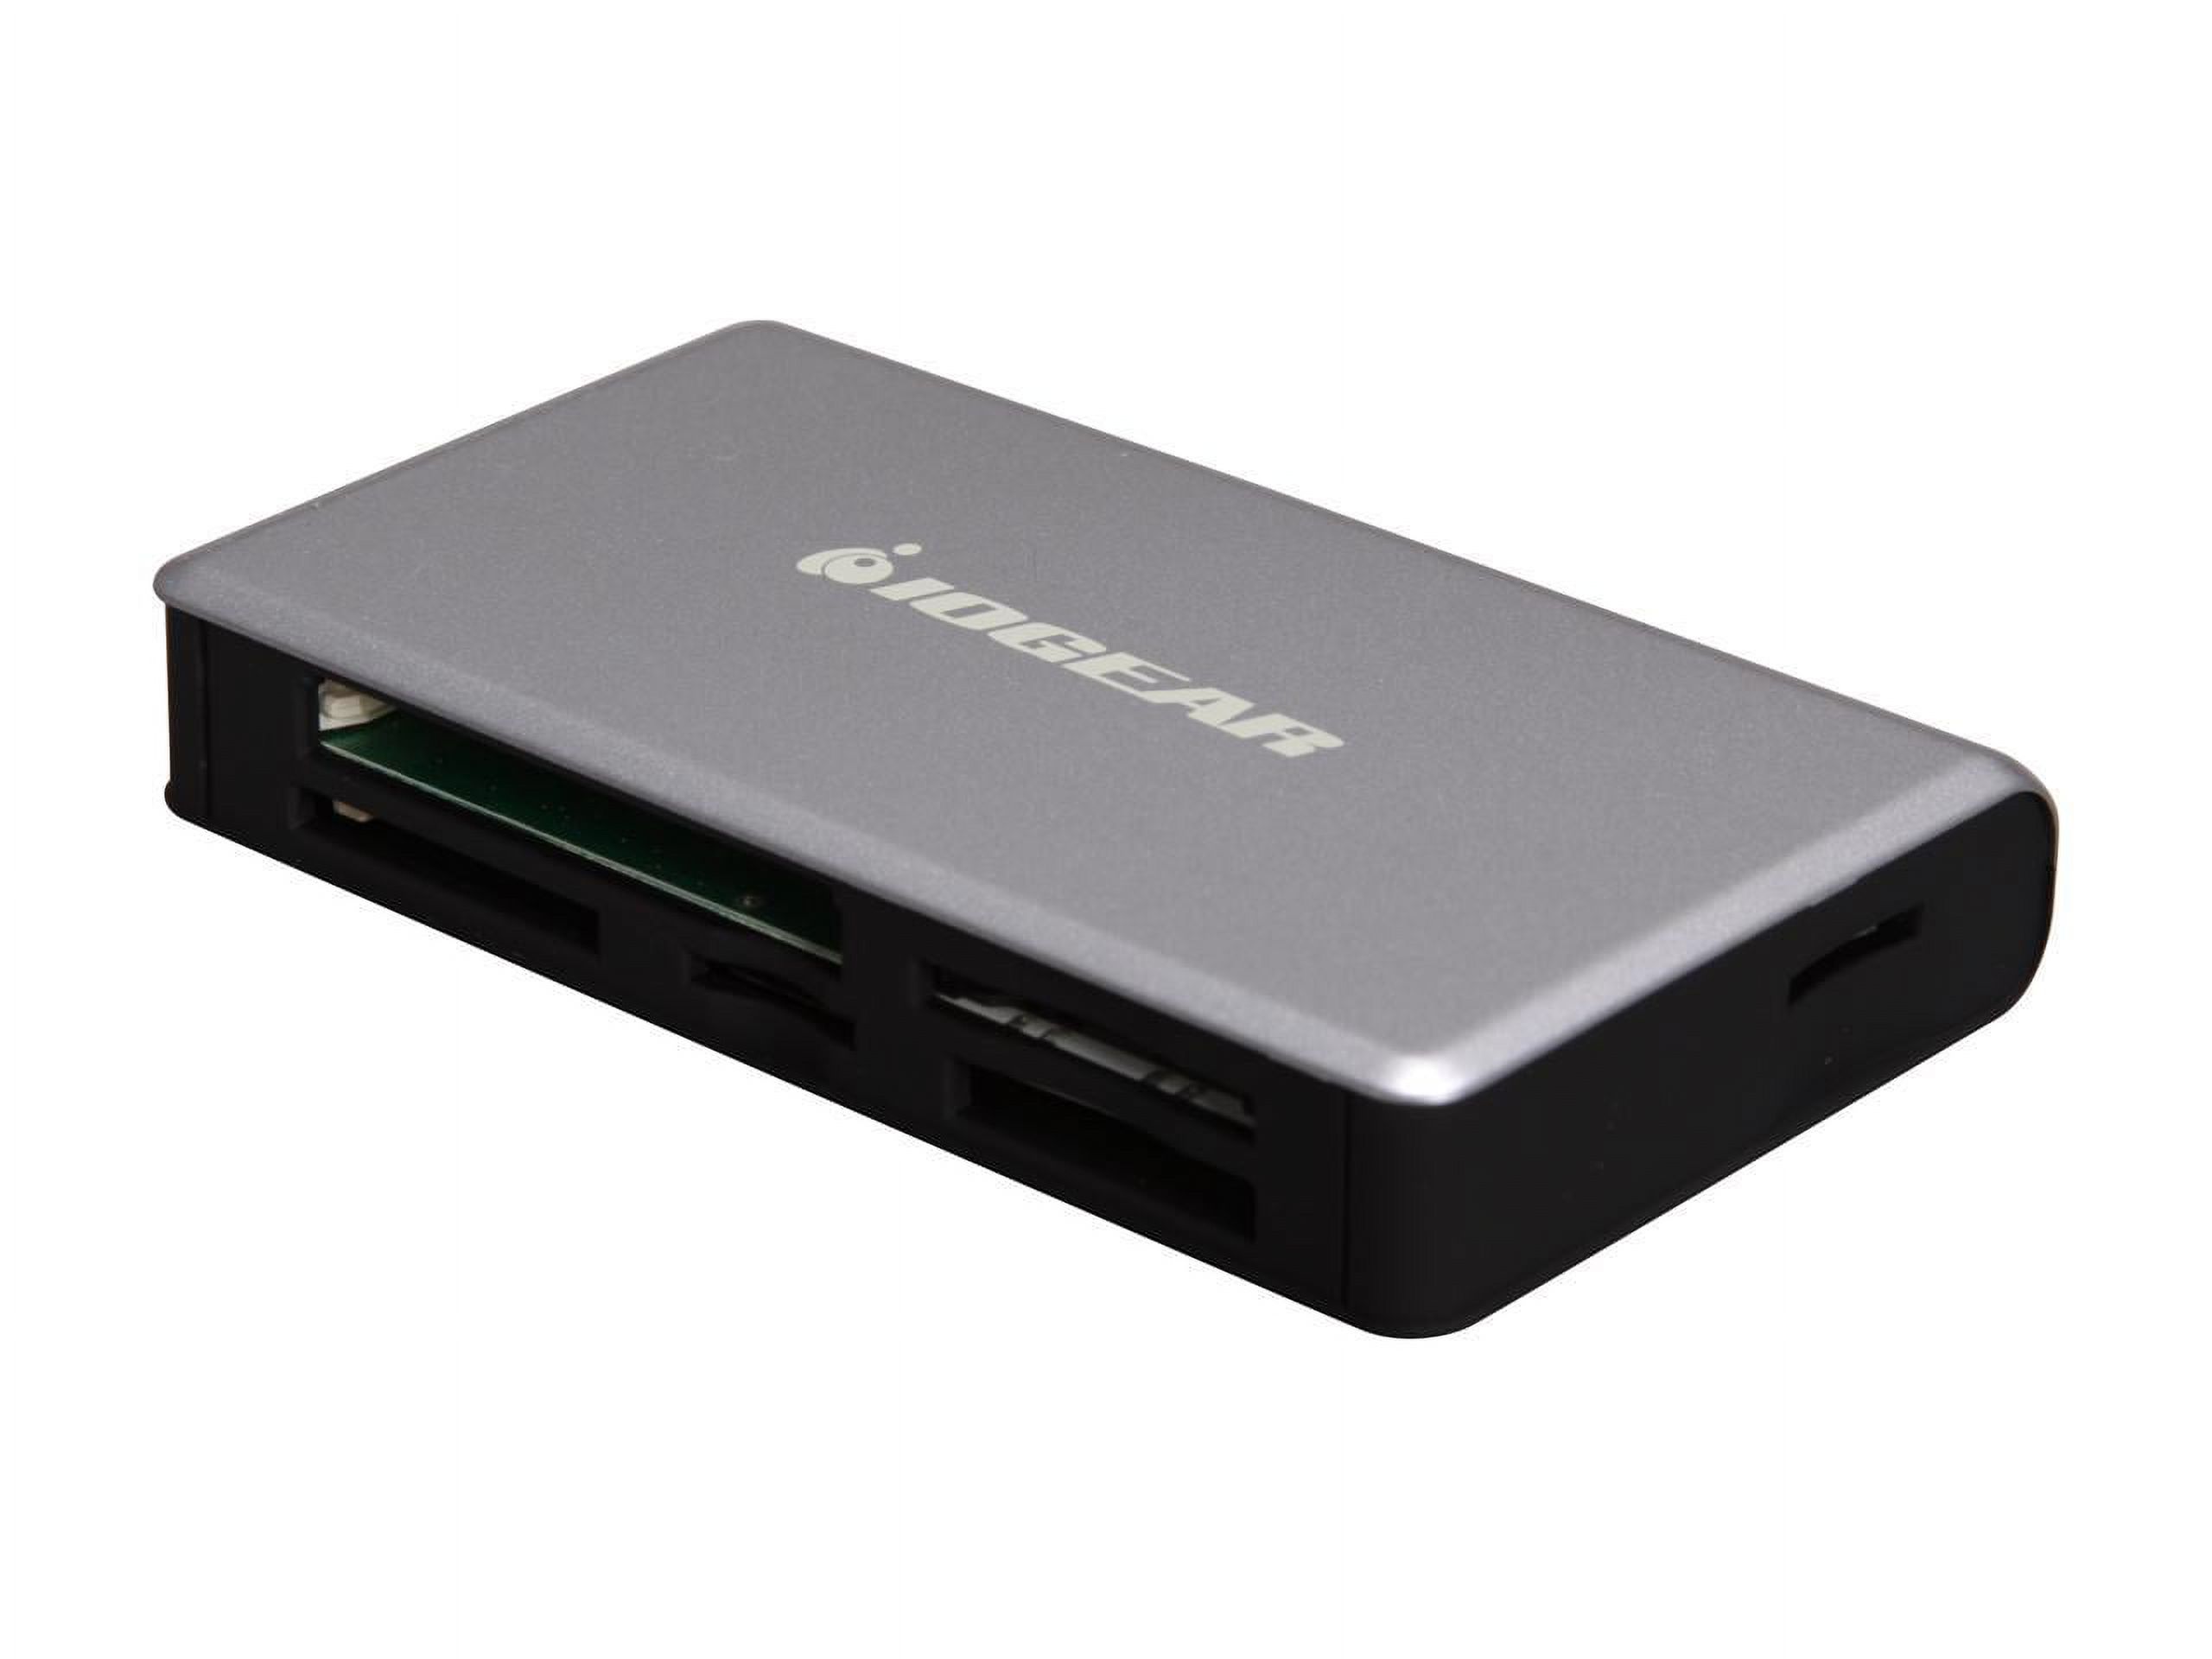 IOGEAR GFR281 USB 2.0 56-in-1 Memory Card Reader / Writer - image 1 of 2